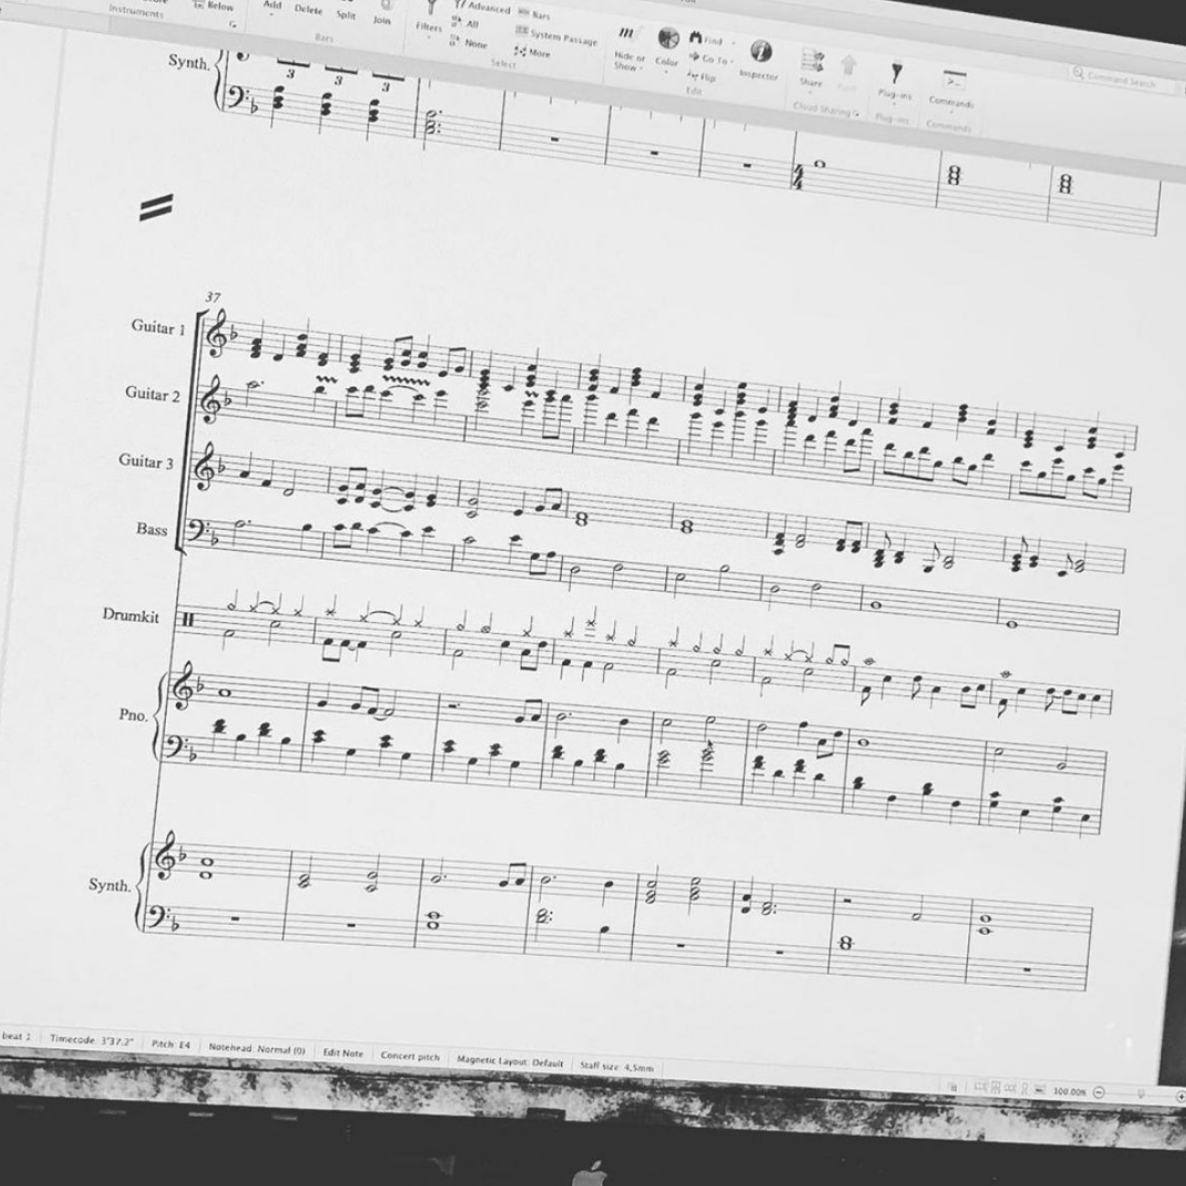 🎼 Sheet music 📷 instagr.am/victorgashnikov ▶️ avid.com/sibelius #sheetmusic #avid #musicnotation #composing #arranging #sibelius #music #orchestrating #notation #transcribing